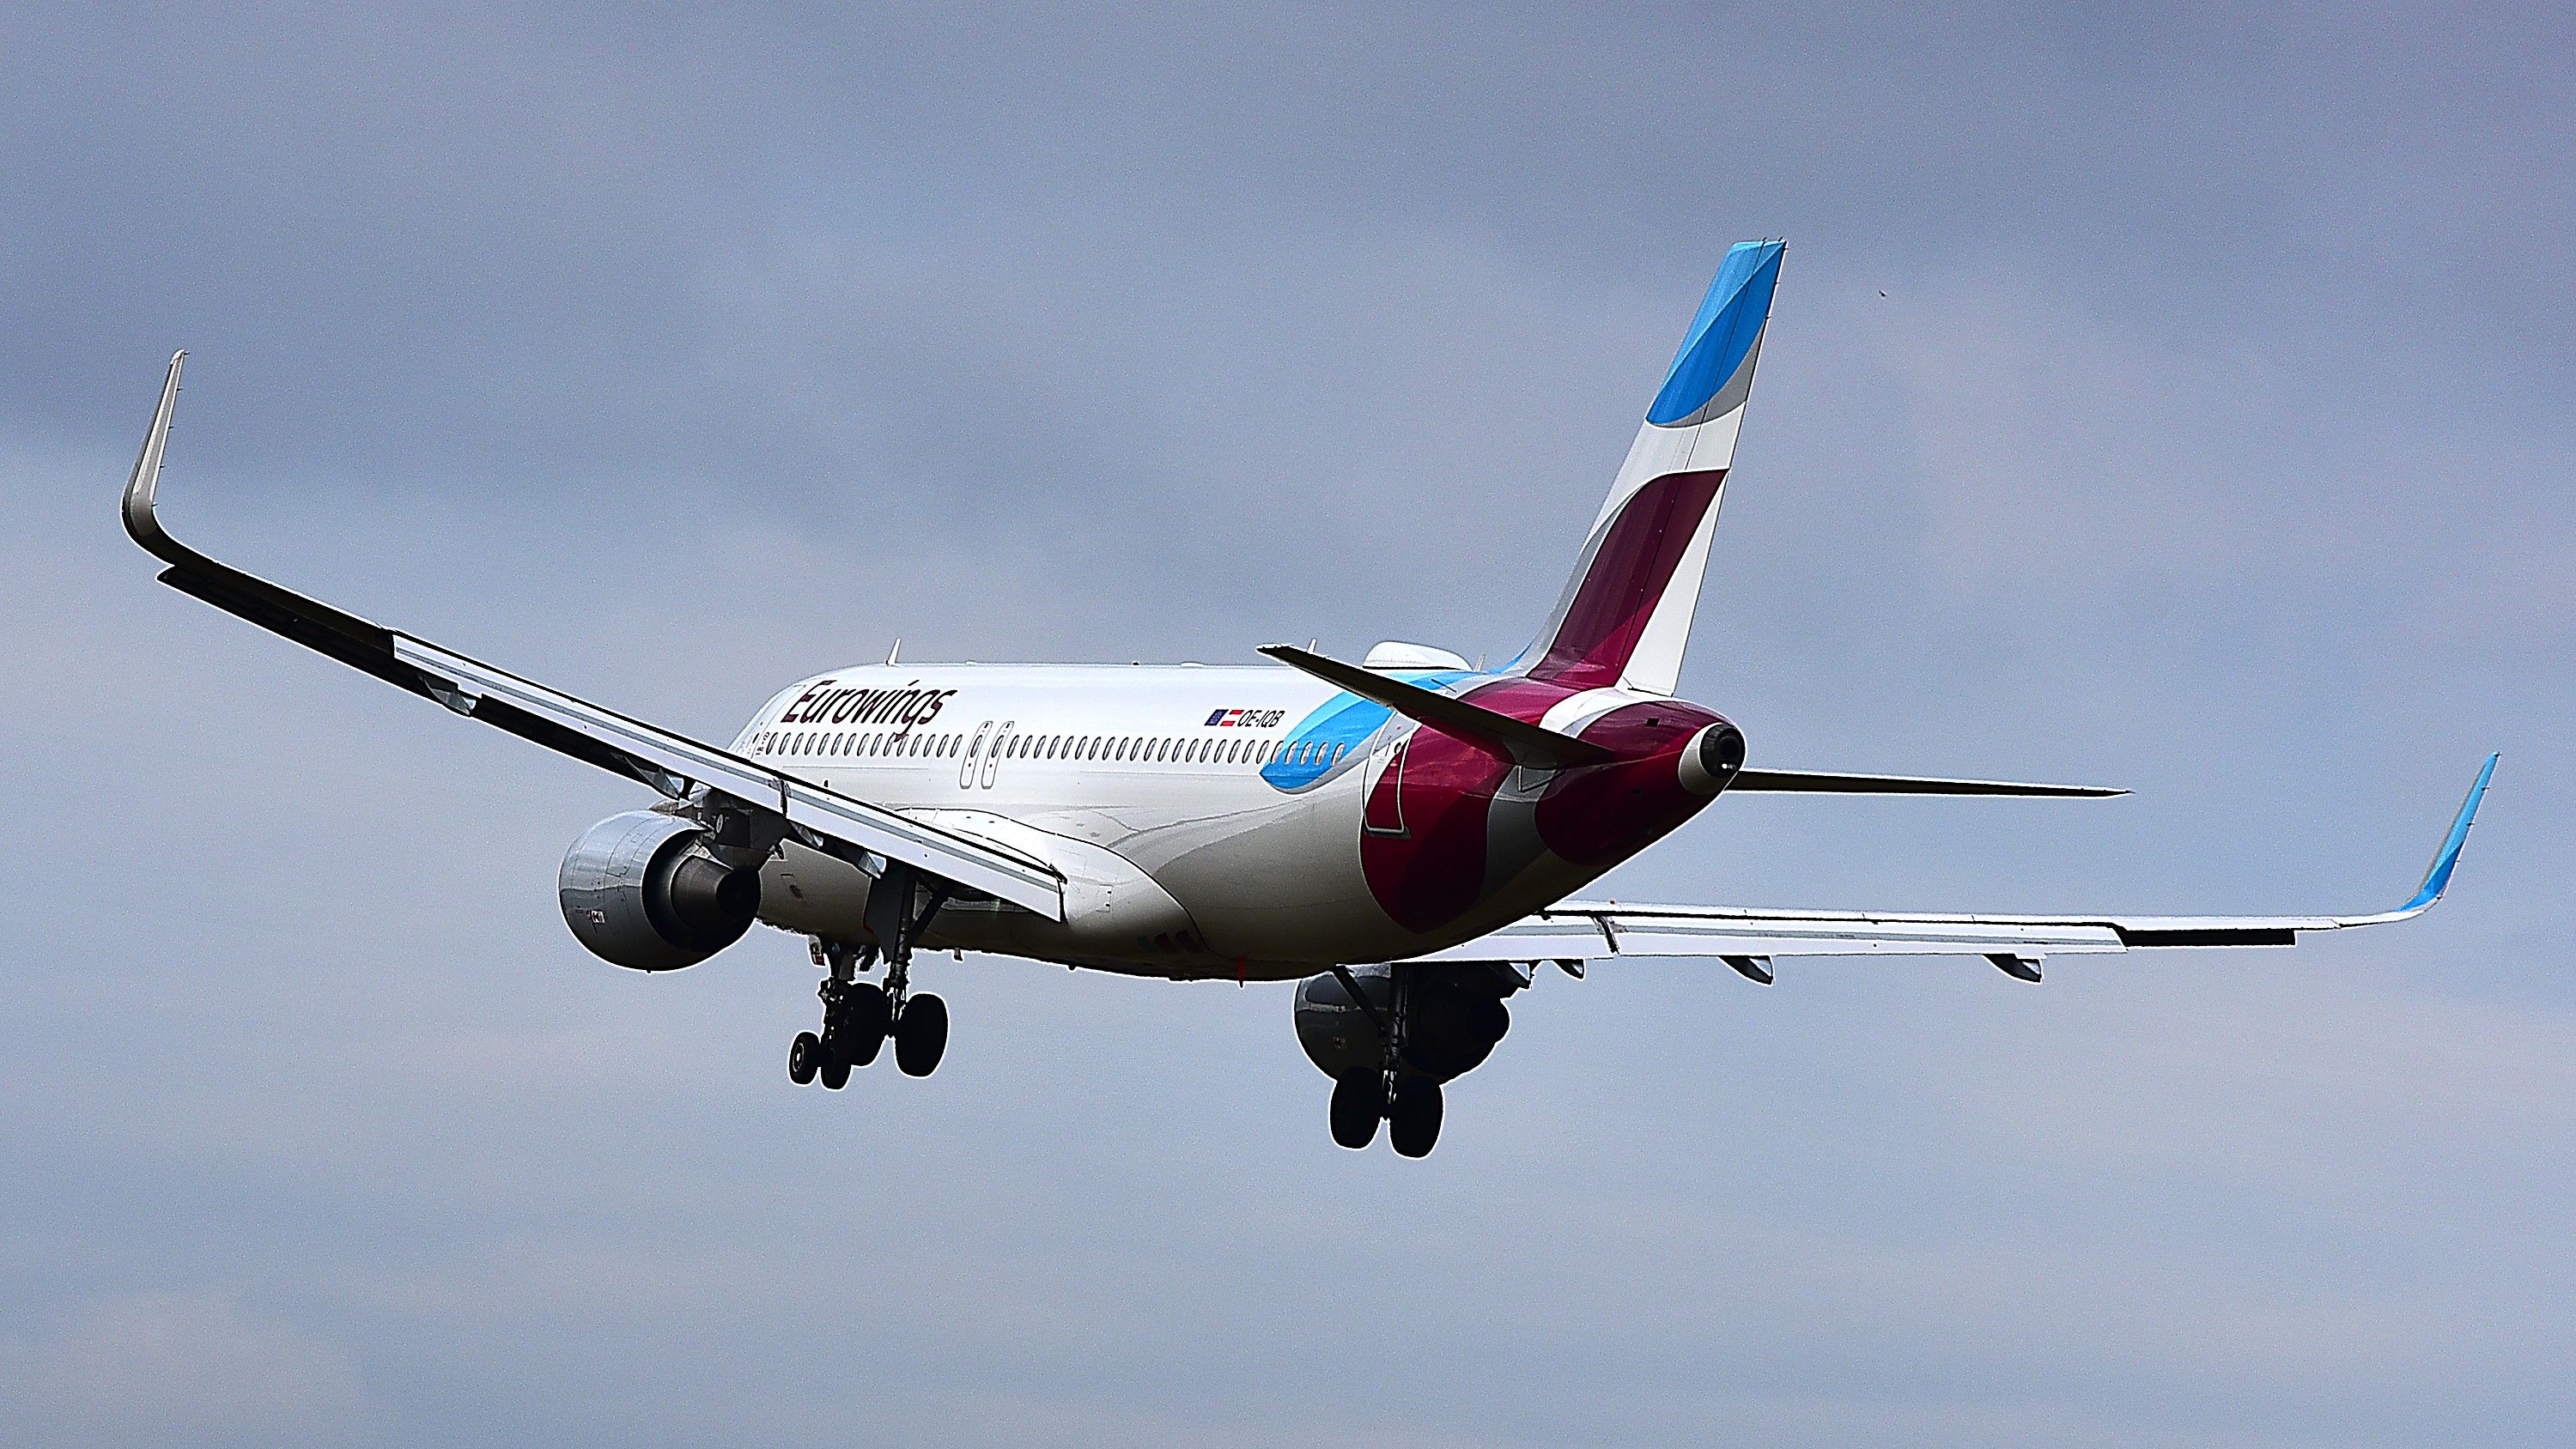 Eurowings Airbus A320 landing at Frankfurt Airport